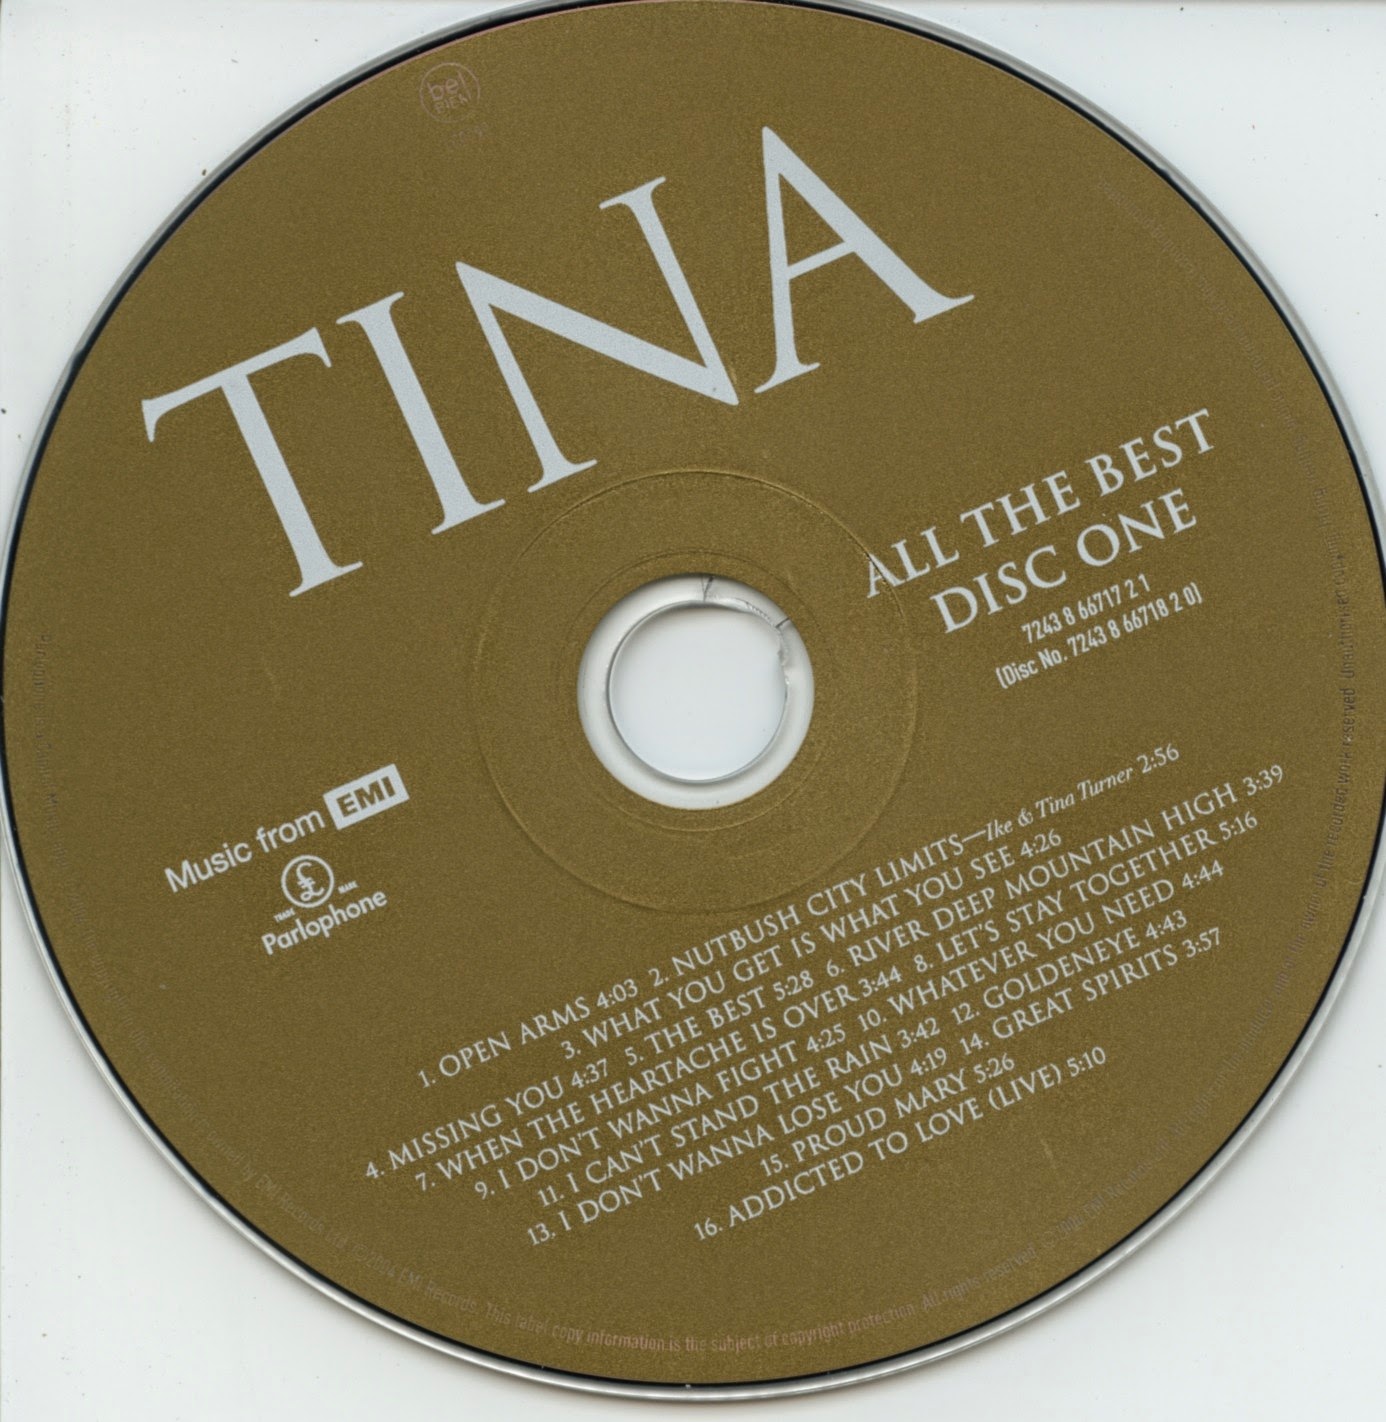 Turner simply. Tina Turner 2000. Tina Turner - (all the best) - 2010г. Tina Turner 1963. Tina Turner – simply the best CD.